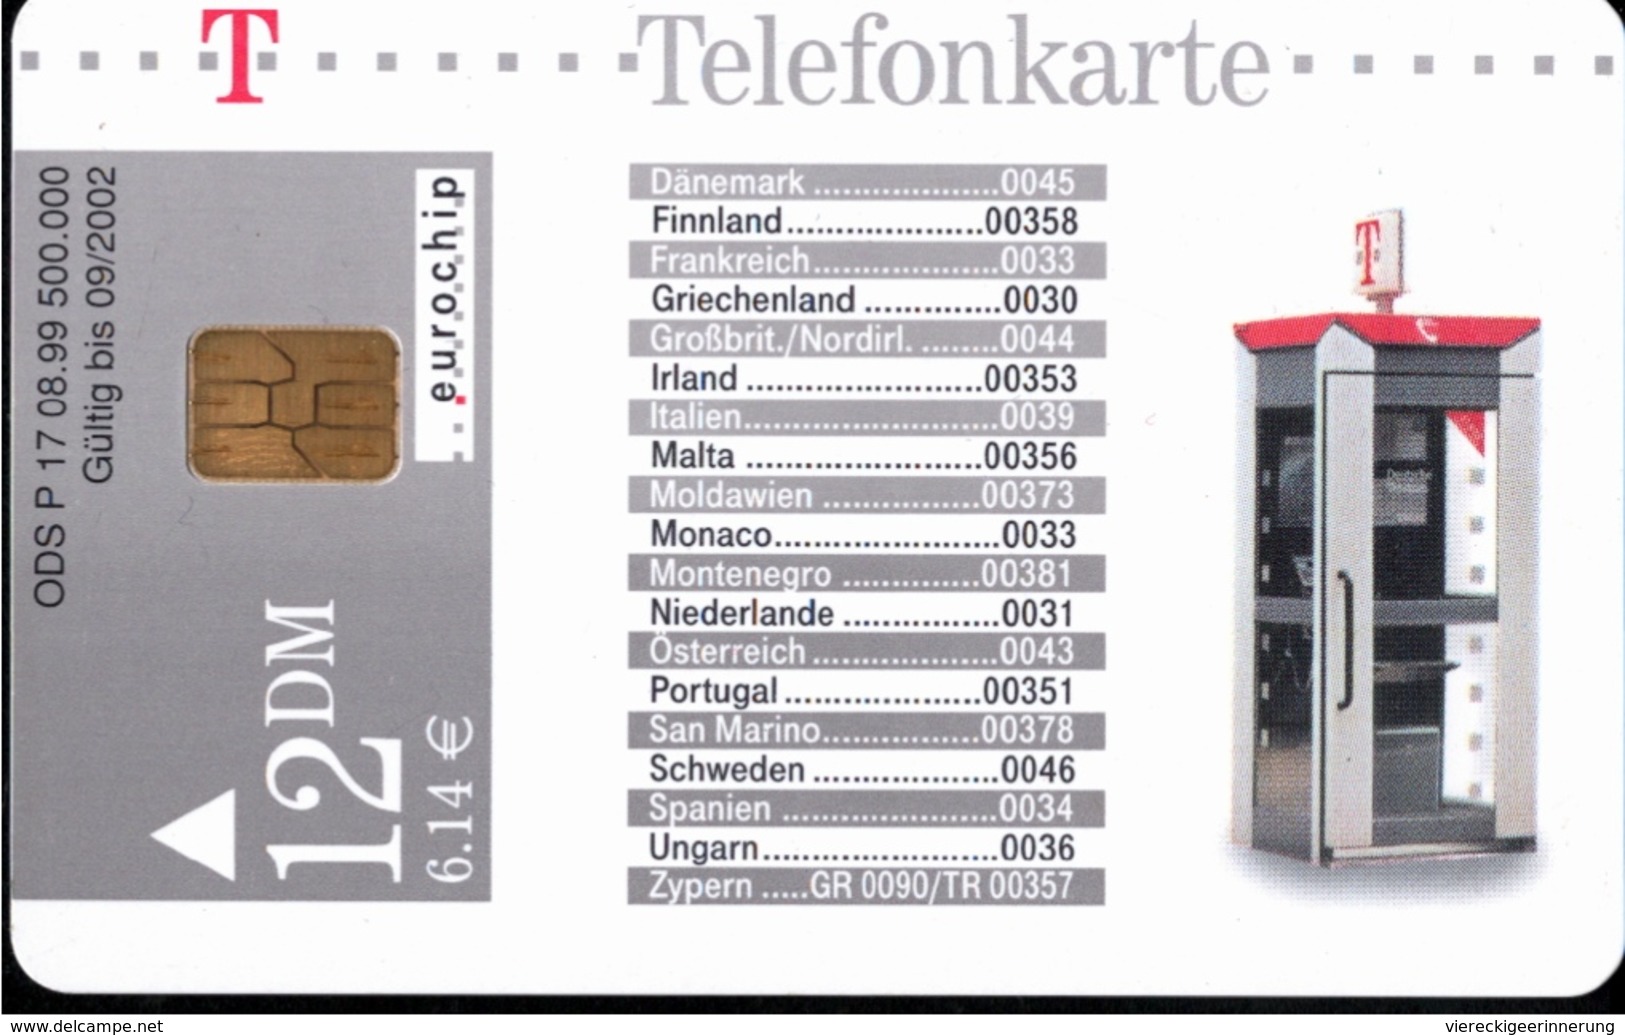 ! Telefonkarte, Telecarte, Phonecard, 1999, P17, Auflage 500000, Telekom Telefonhäuschen, Germany - P & PD-Series : D. Telekom Till